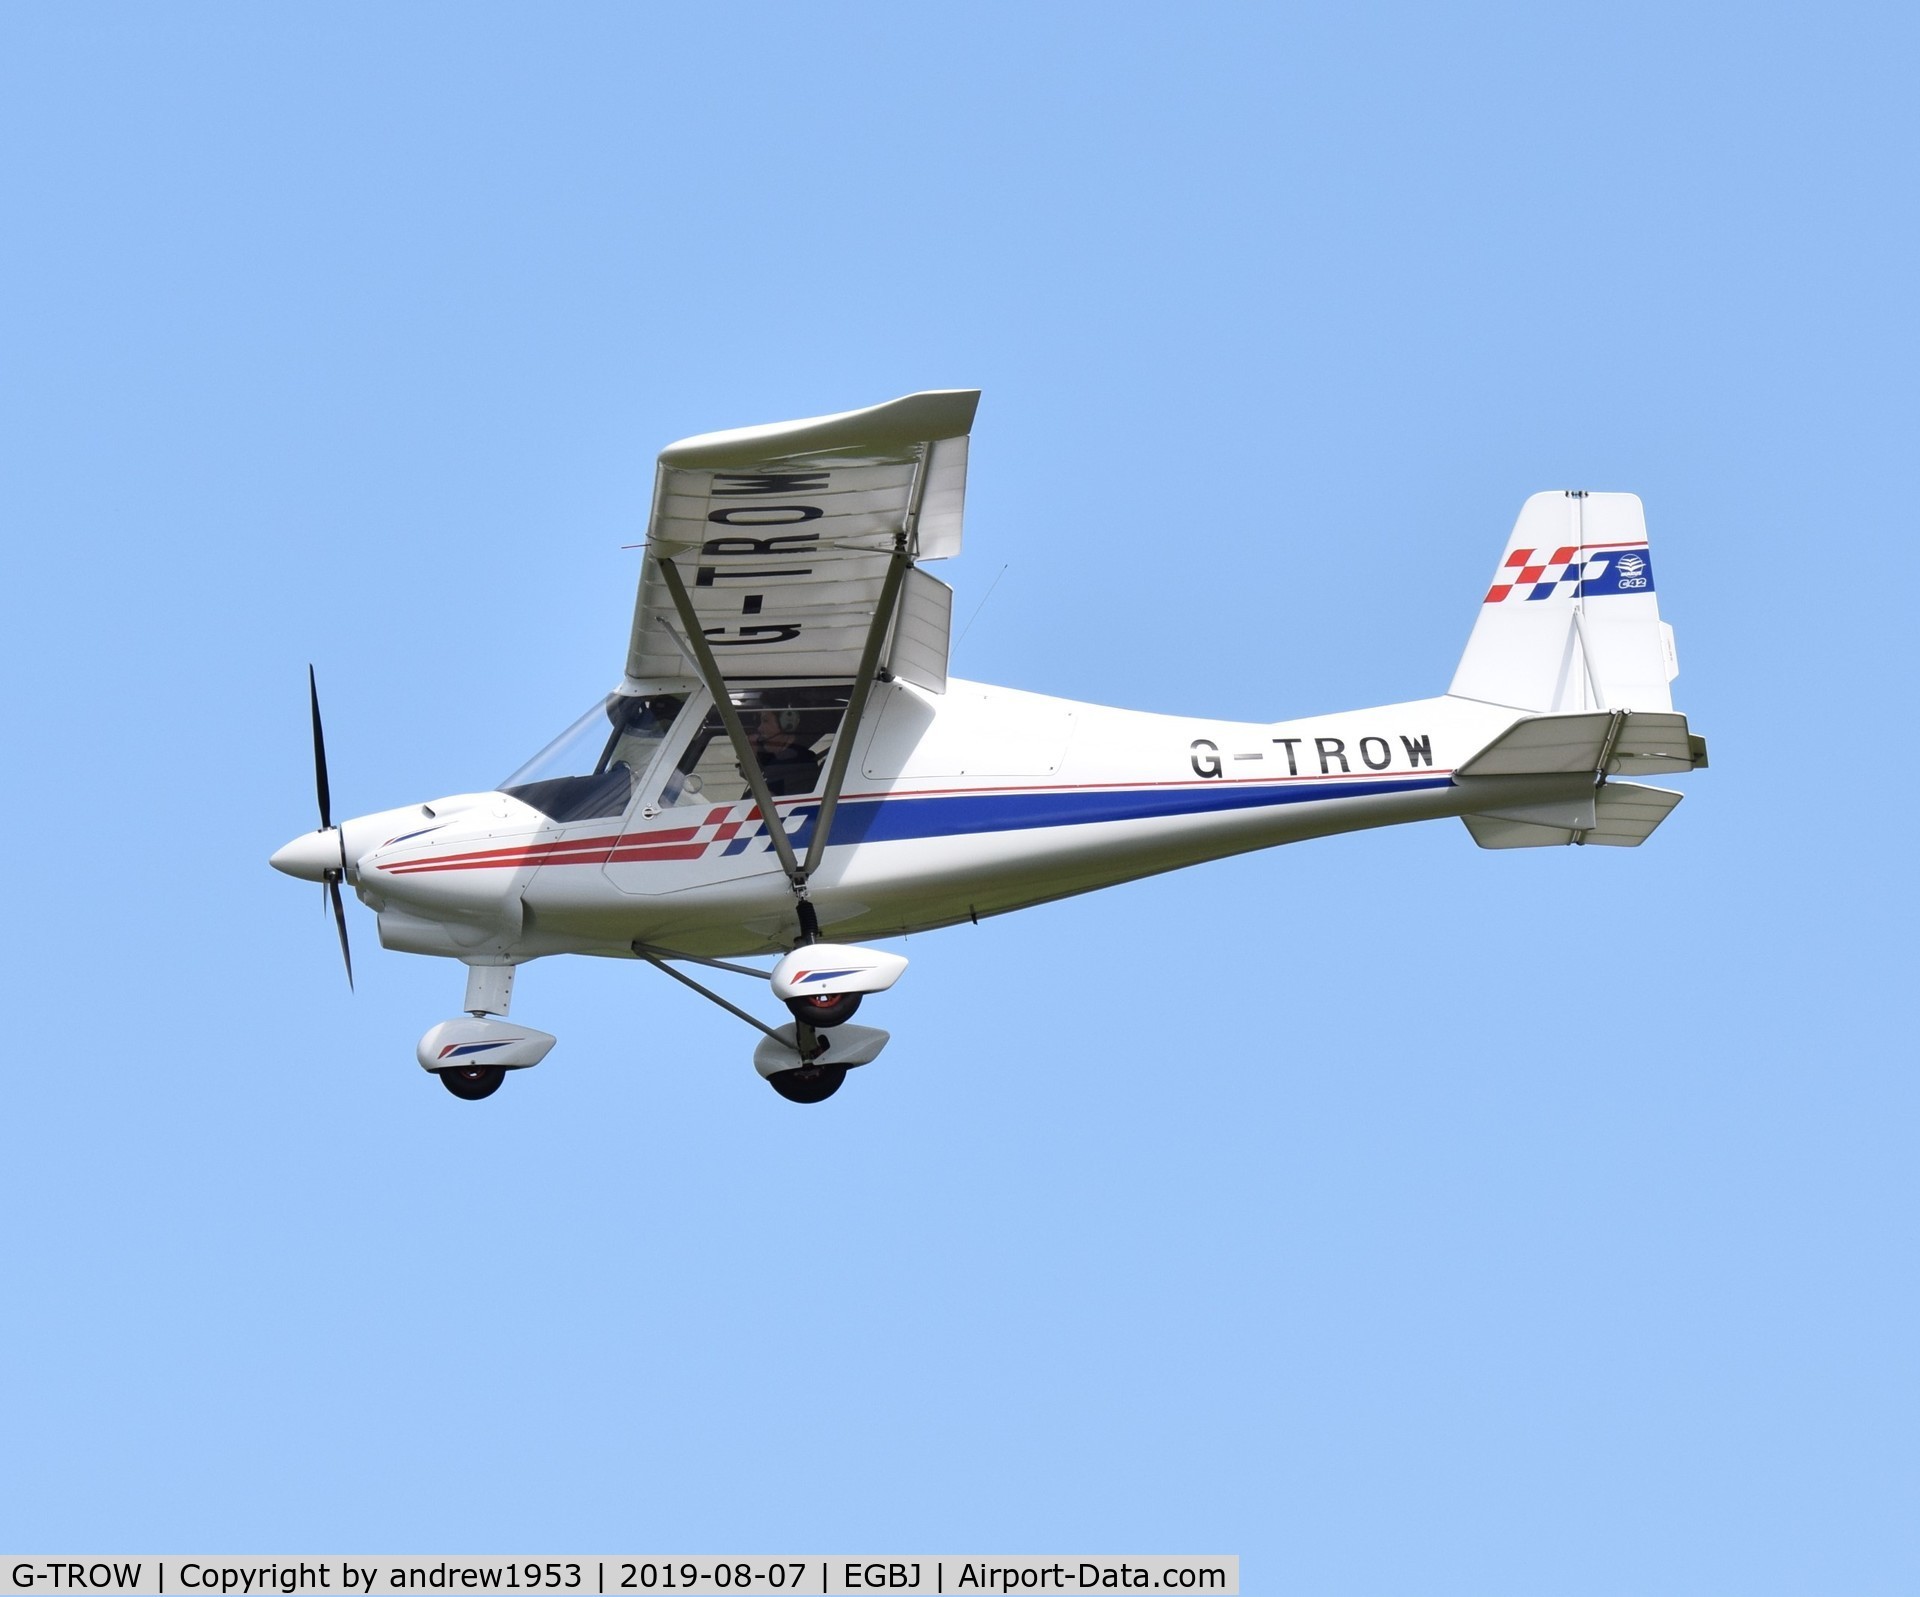 G-TROW, 2019 Ikarus C42 FB80 Bravo C/N 1811-7553, G-TROW landing at Gloucestershire Airport.